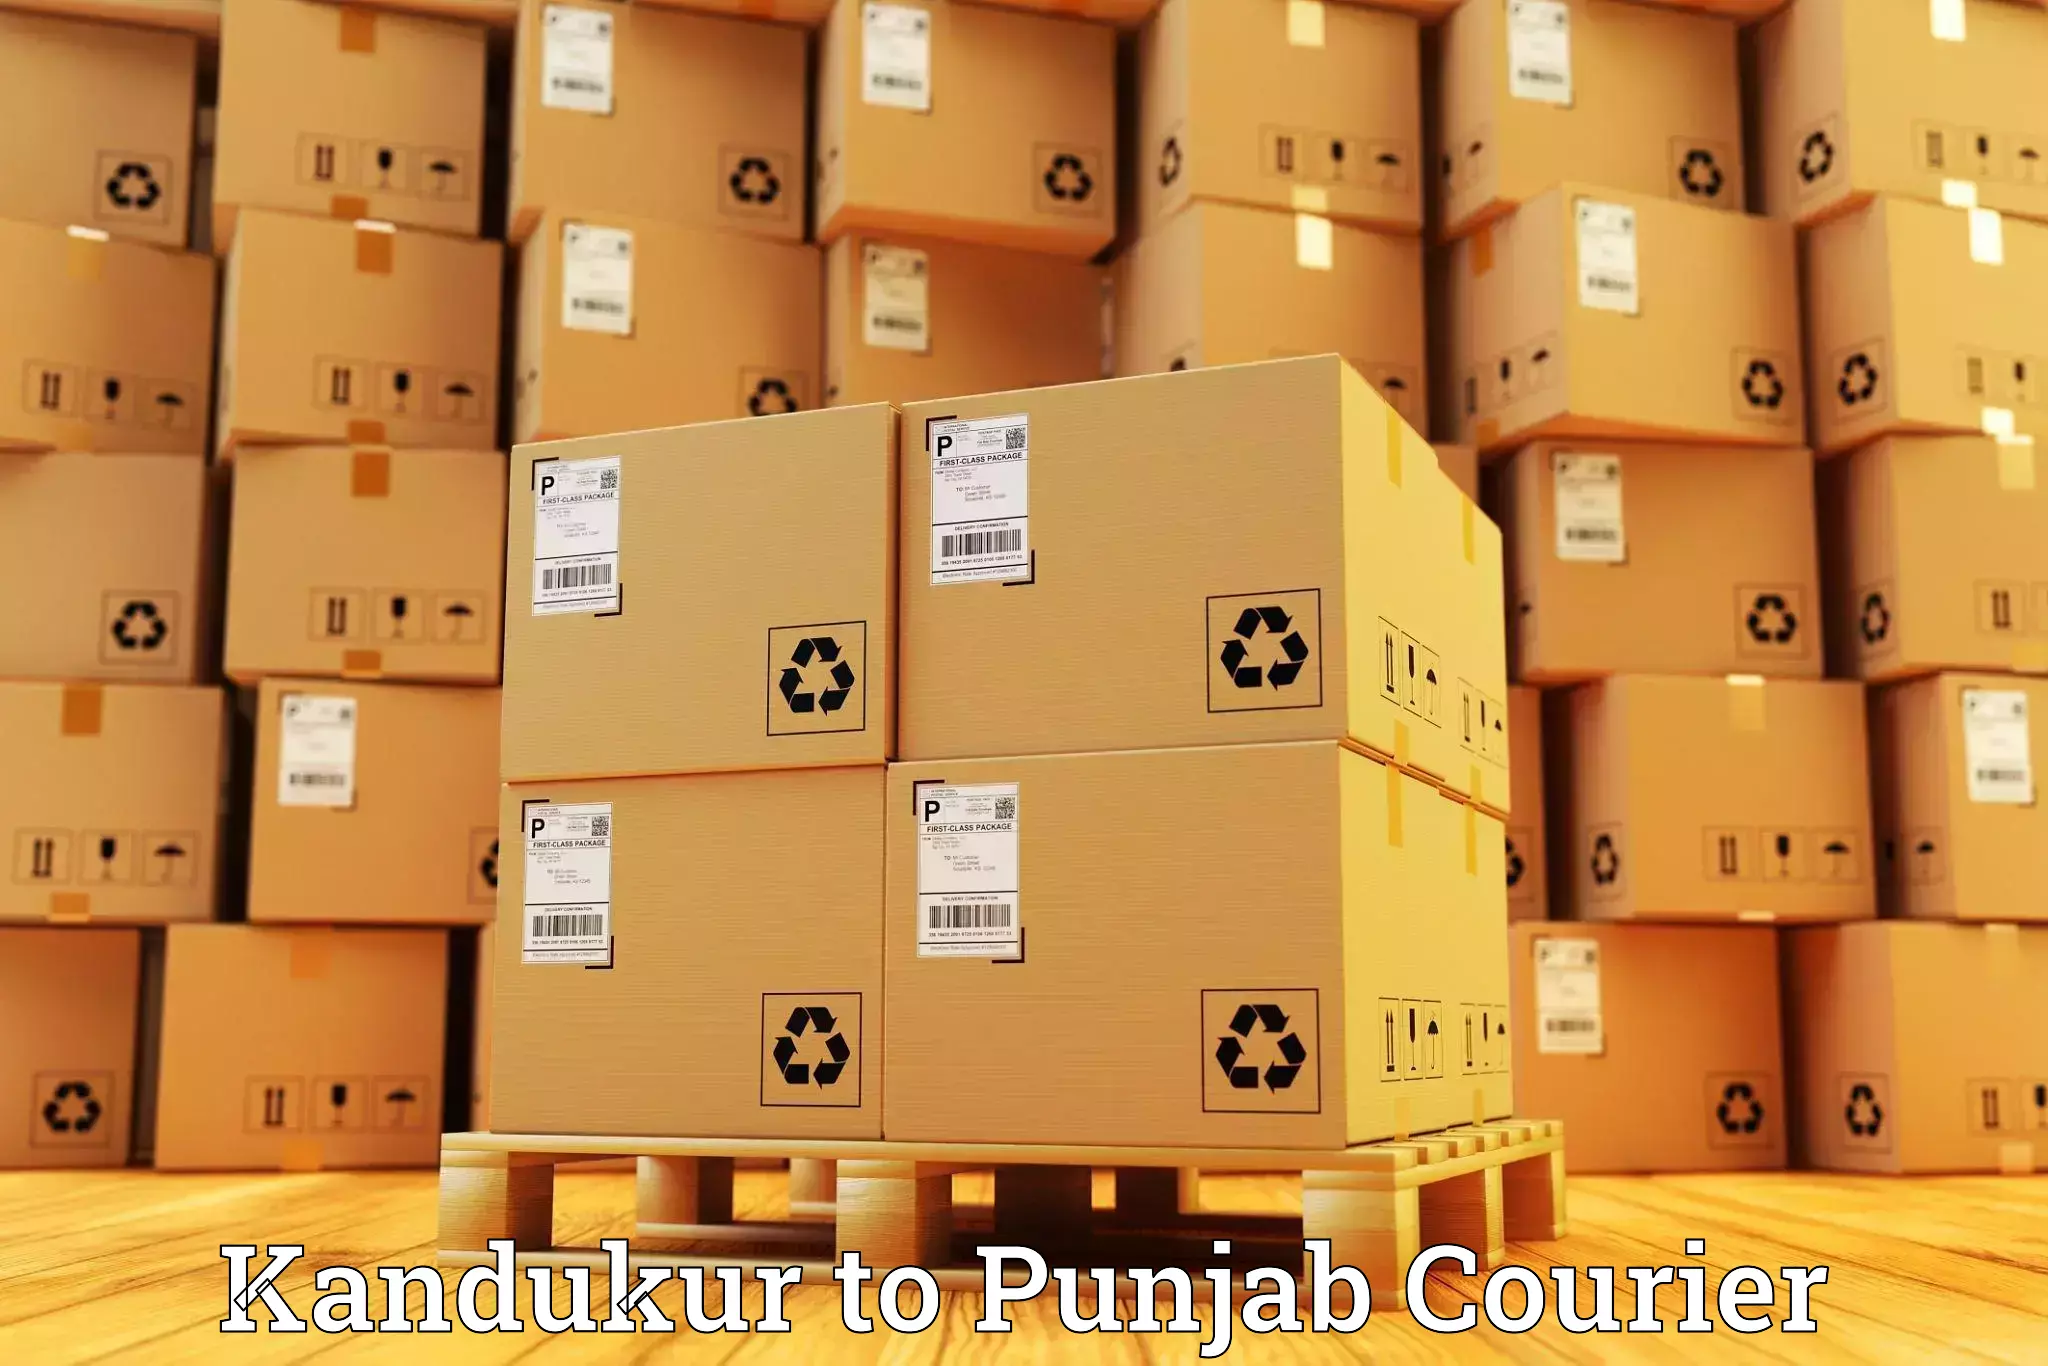 State-of-the-art courier technology Kandukur to Punjab